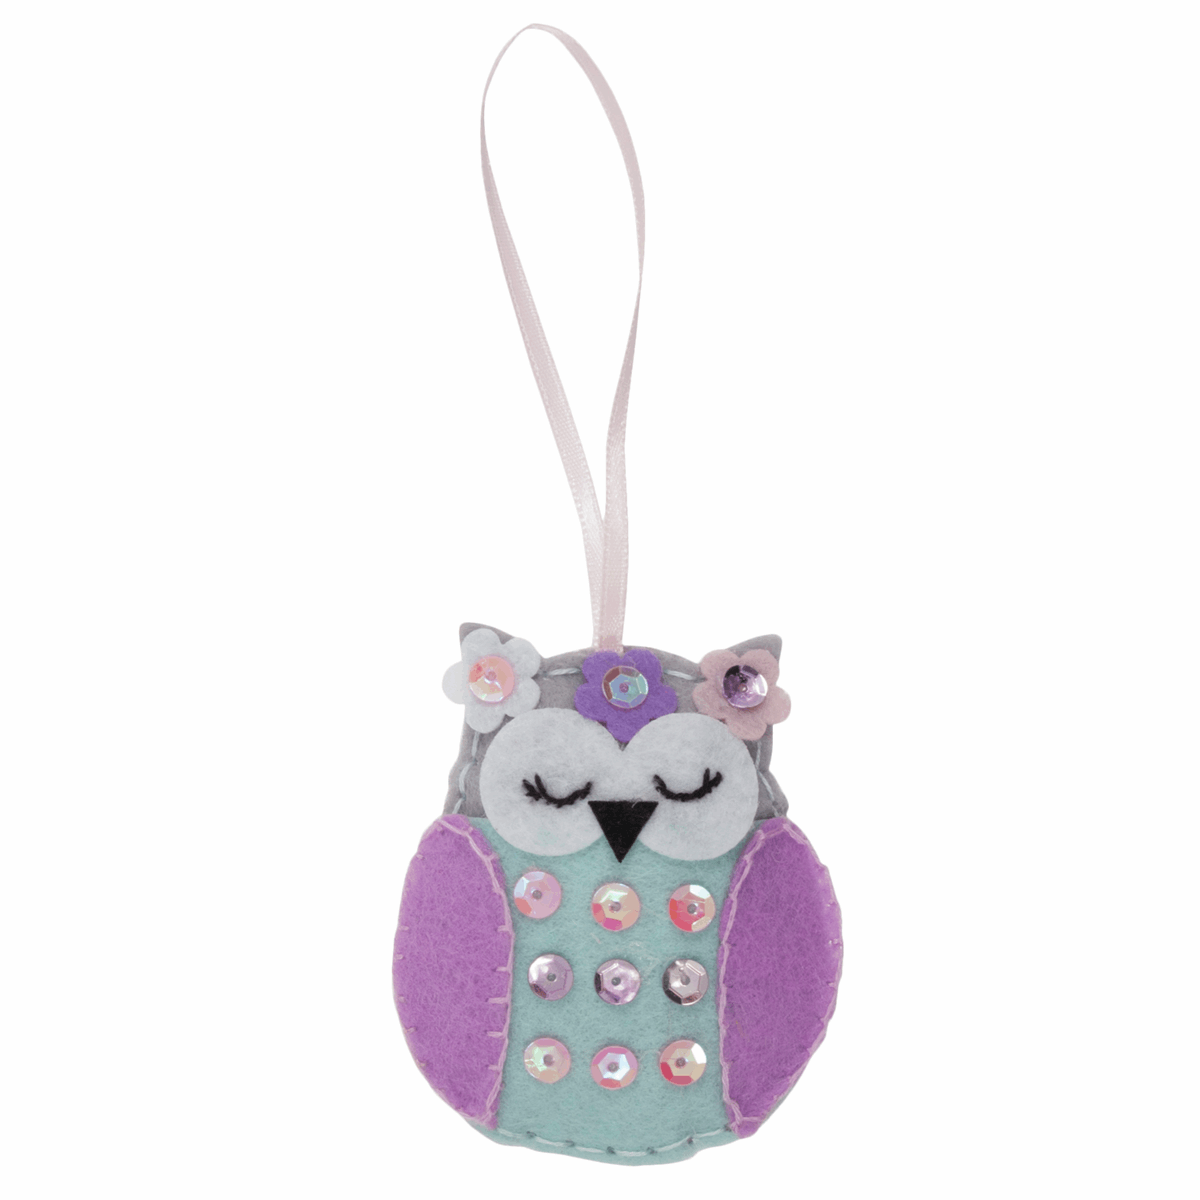 Felt Decoration Kit: Spring Owl